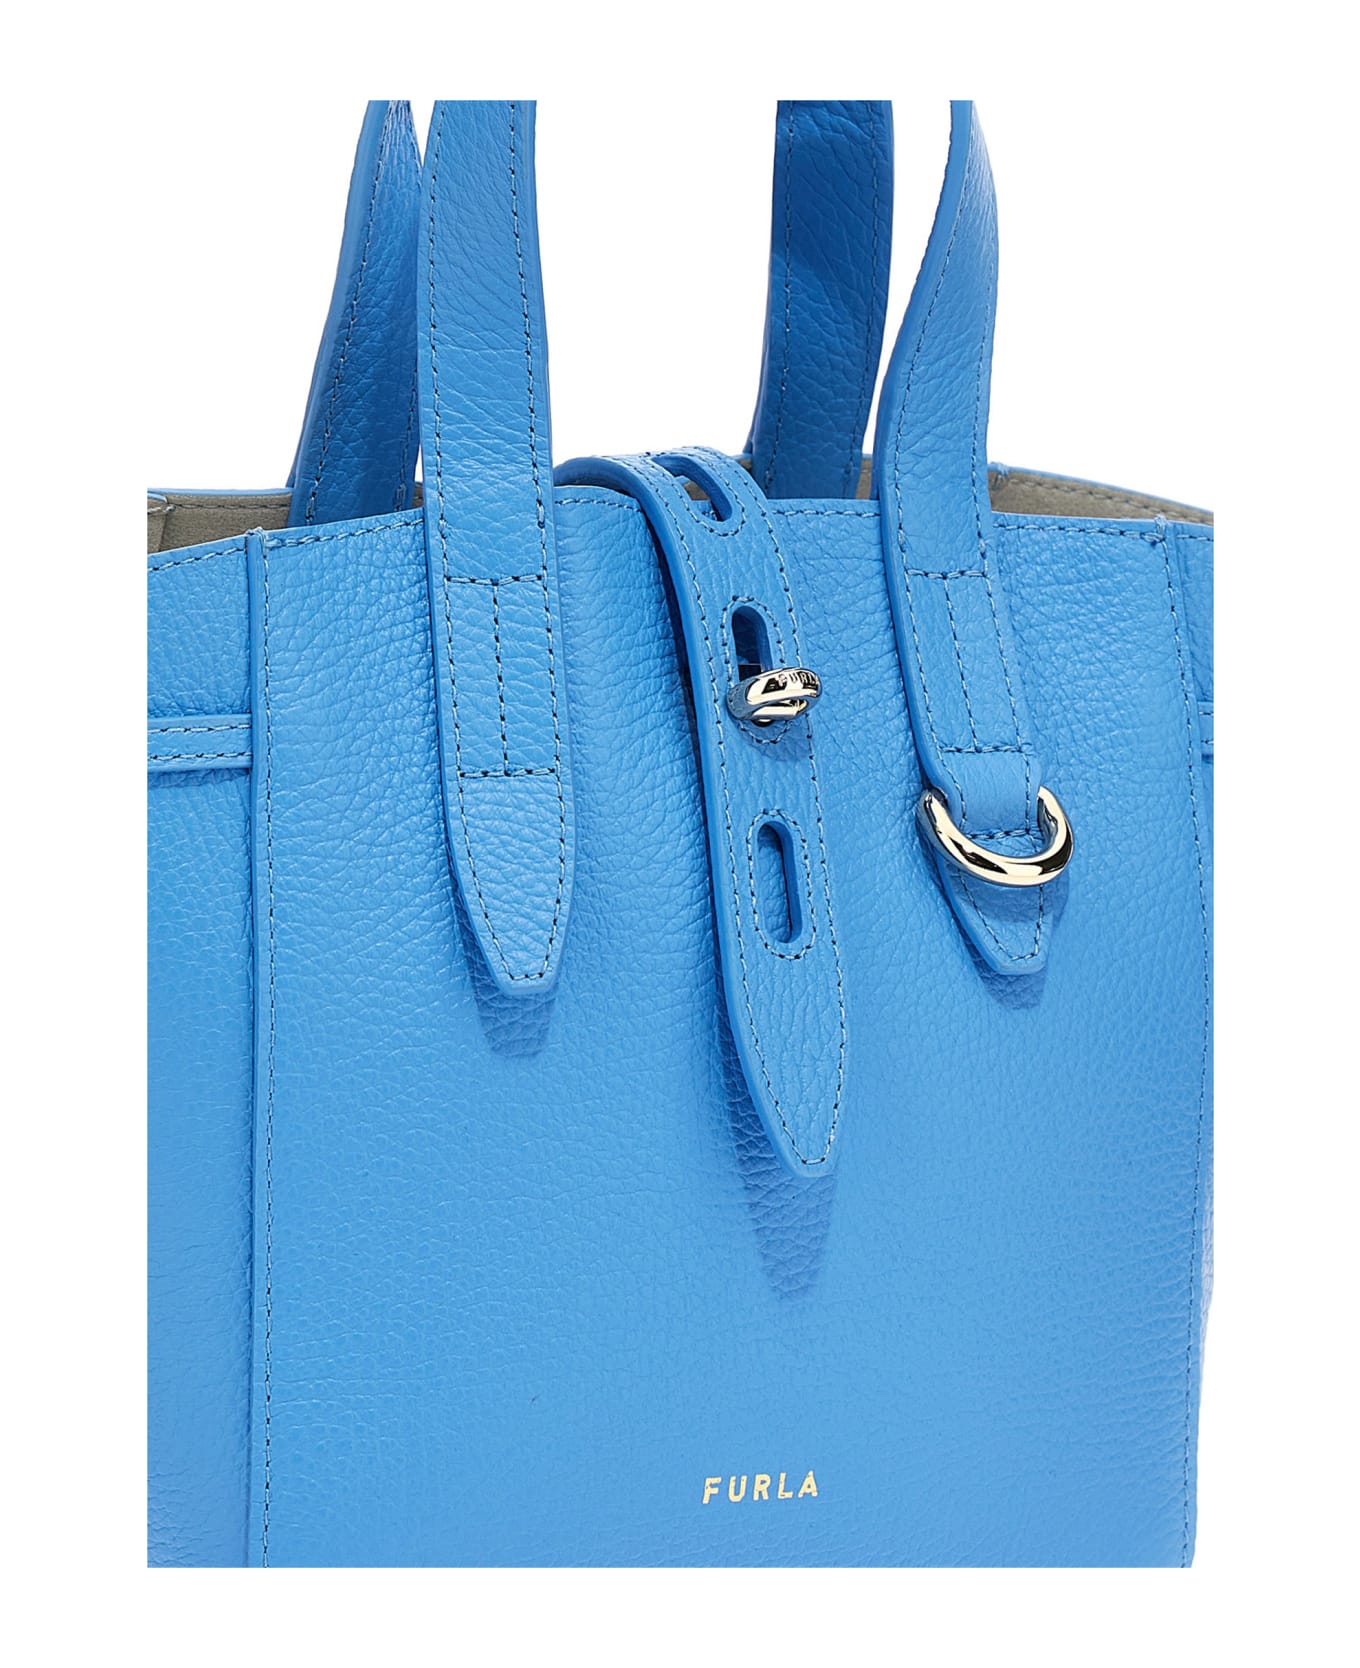 Furla 'furla Net' Handbag - Light Blue トートバッグ